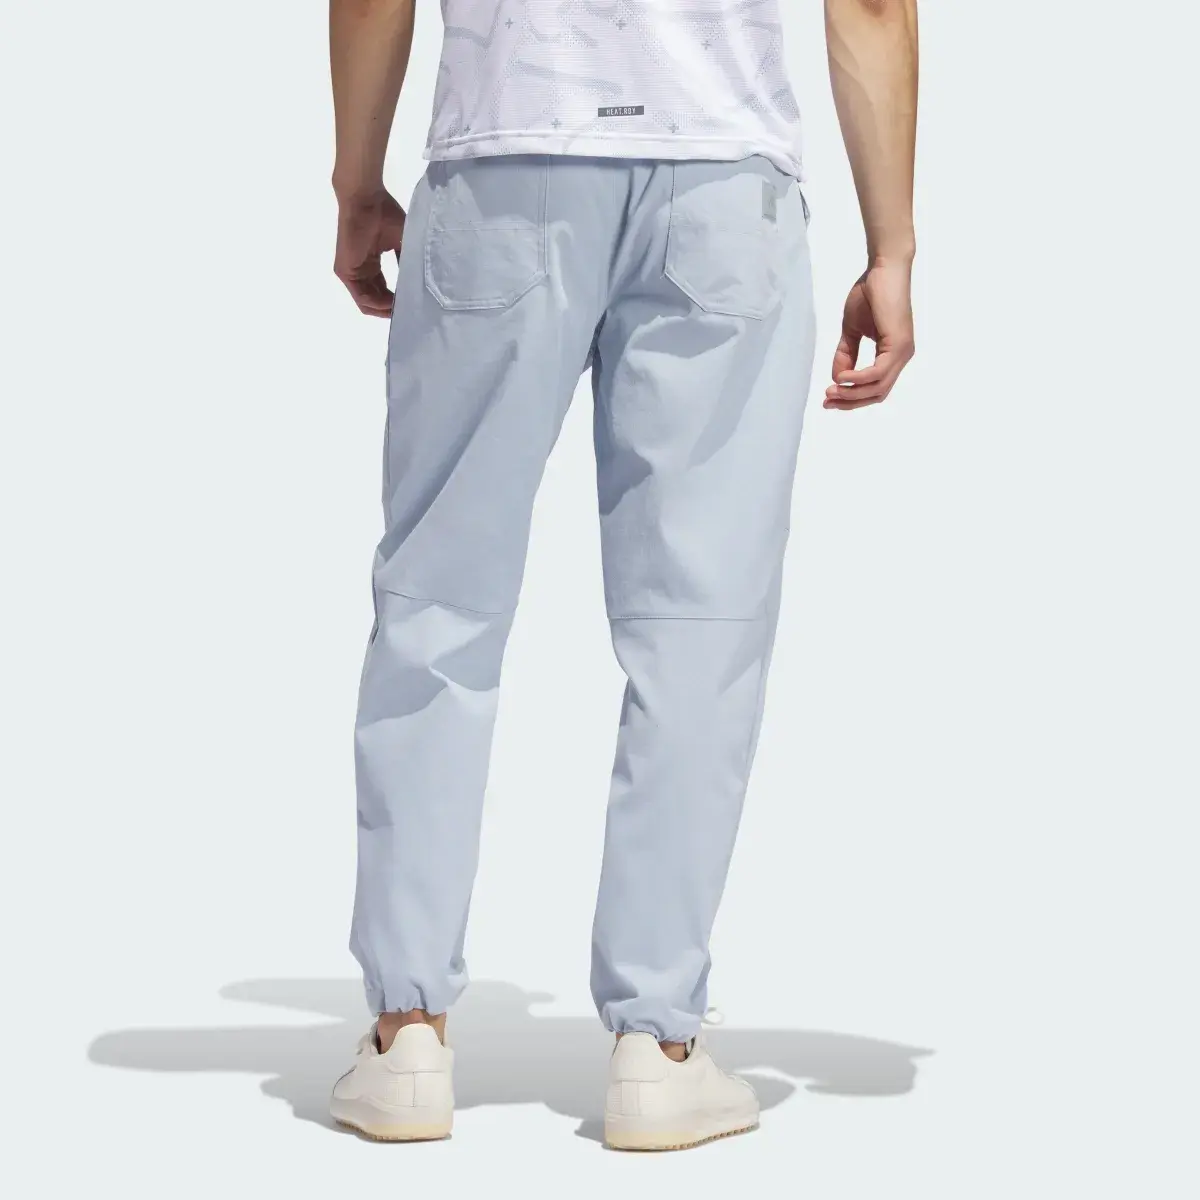 Adidas Adicross Golf Trousers. 2